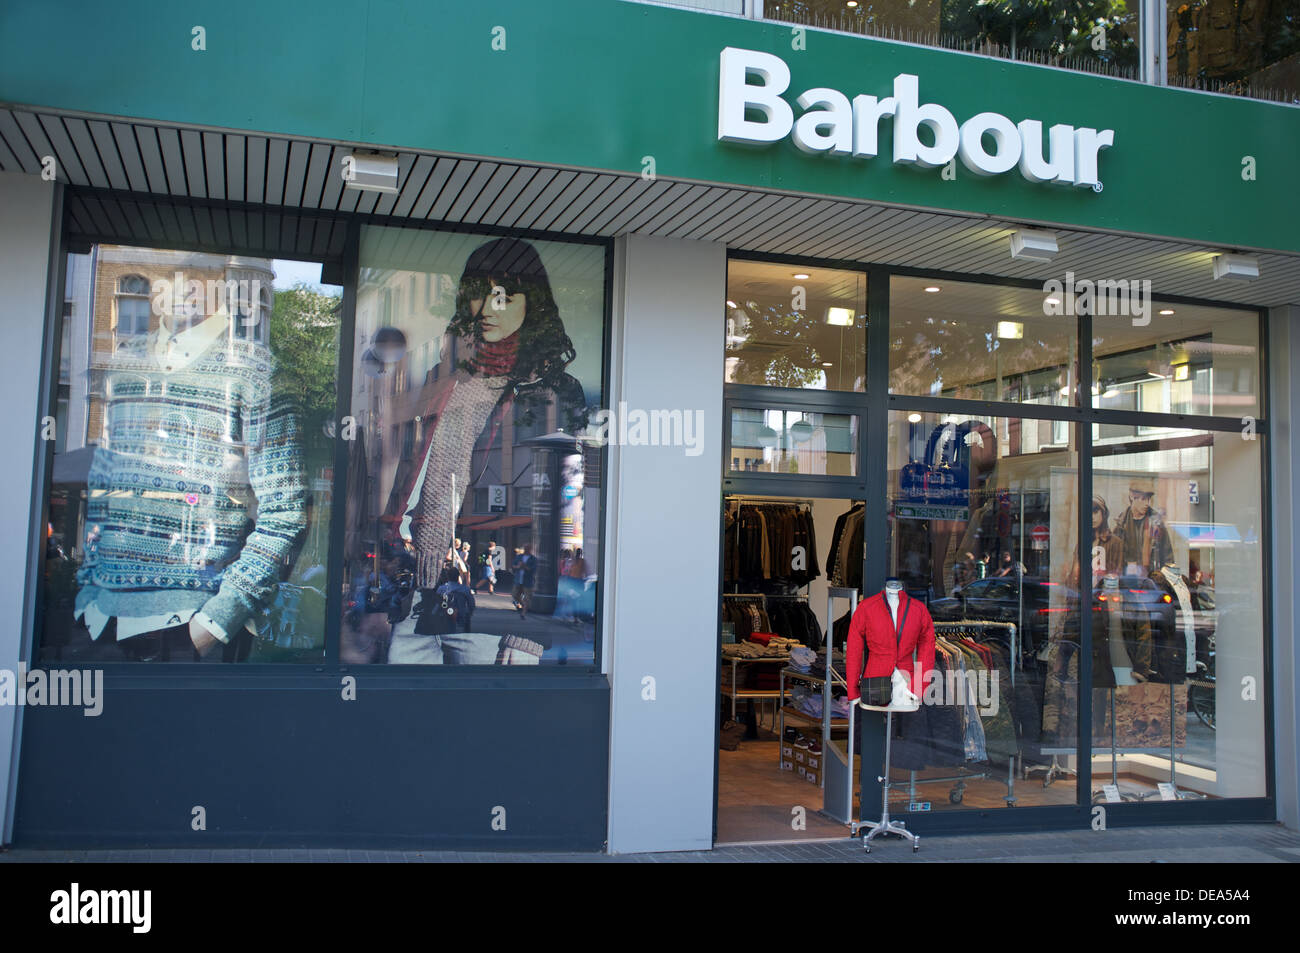 Barbour Retail Store & Factory Outlet Hot Sale, 54% OFF |  larrierecuisine.com